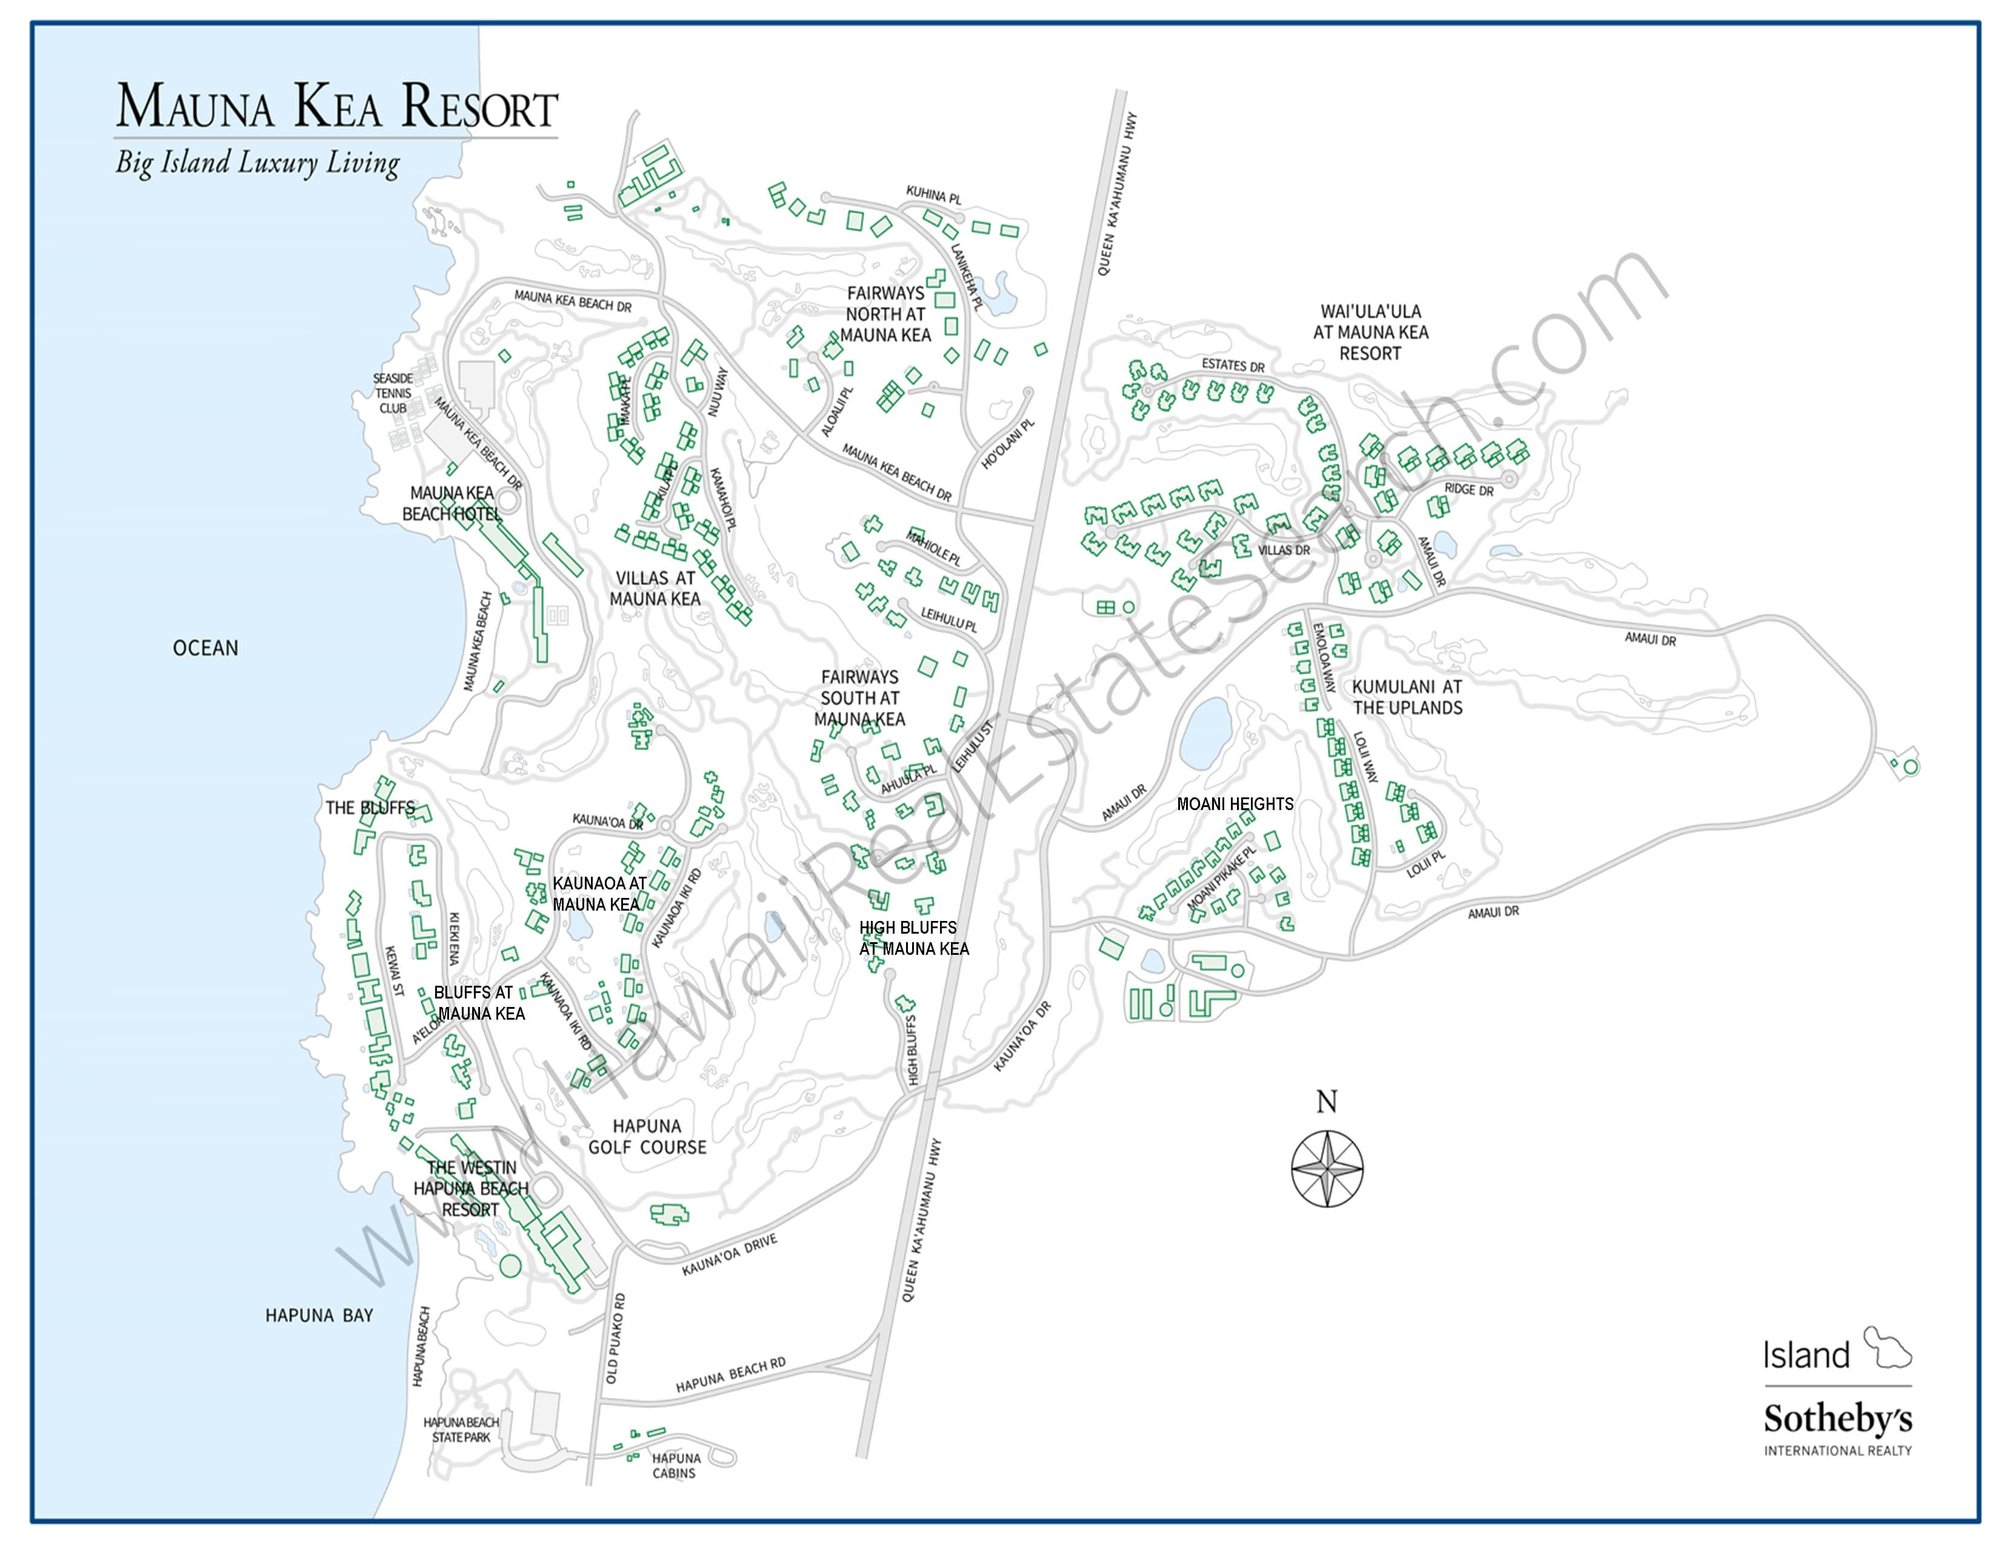 Mauna Kea Resort Map Updated 2020